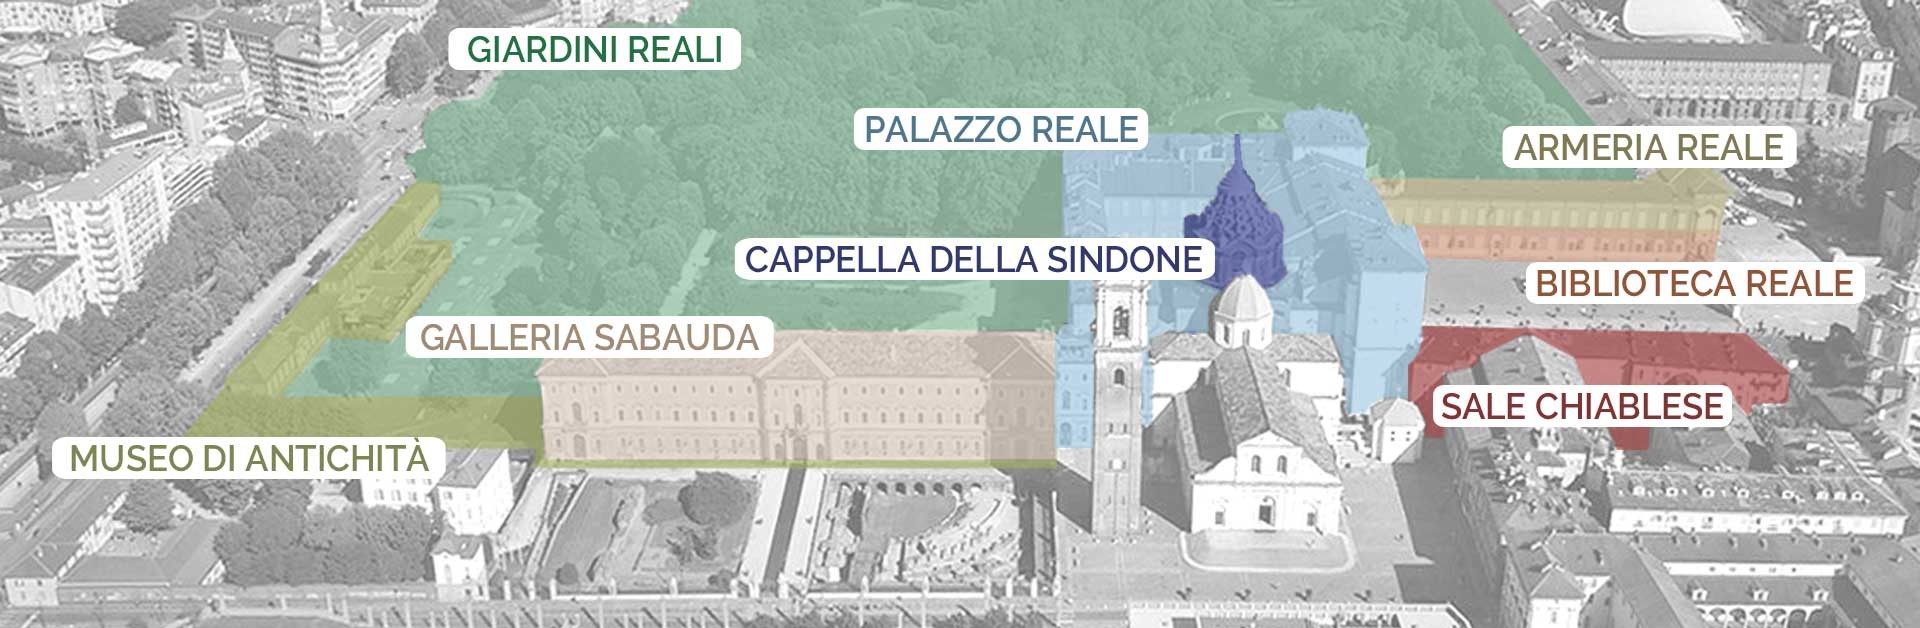 Mappa Musei Reali, Torino